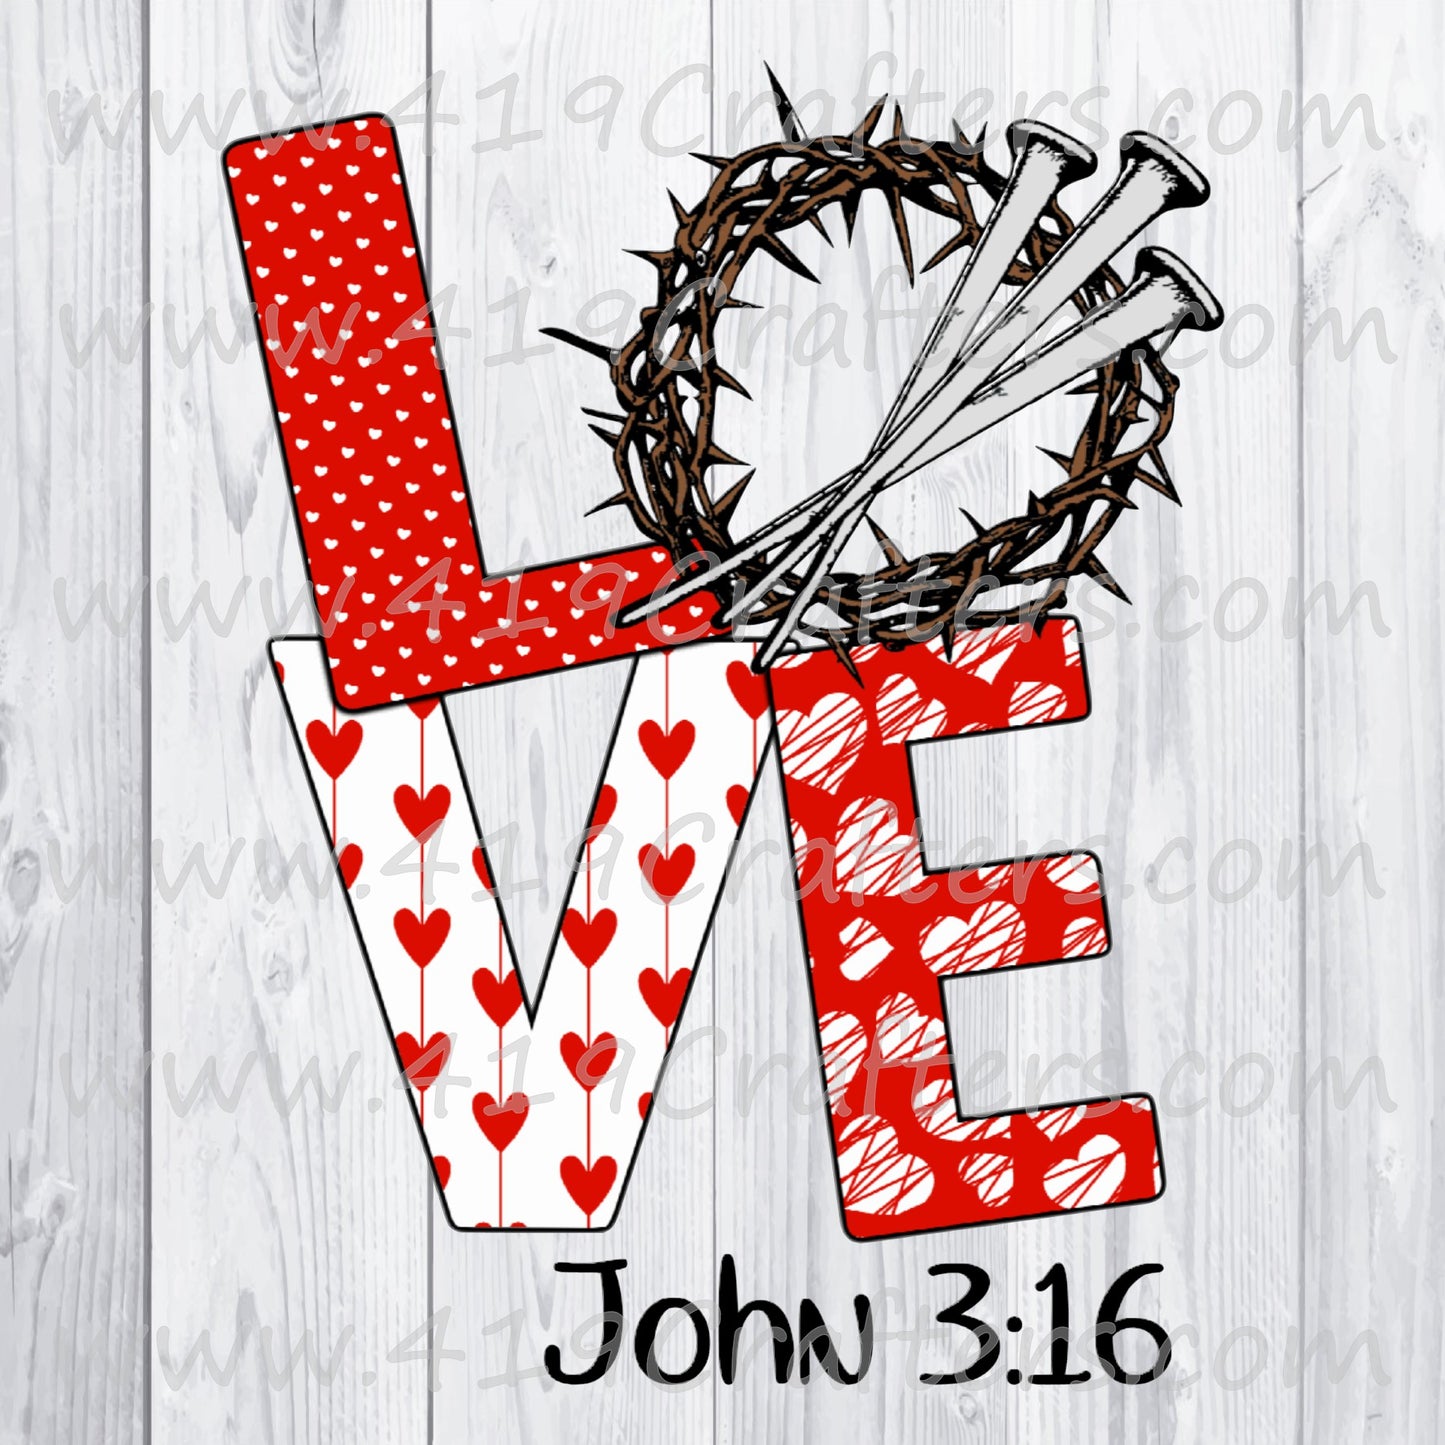 LOVE JOHN 3:16